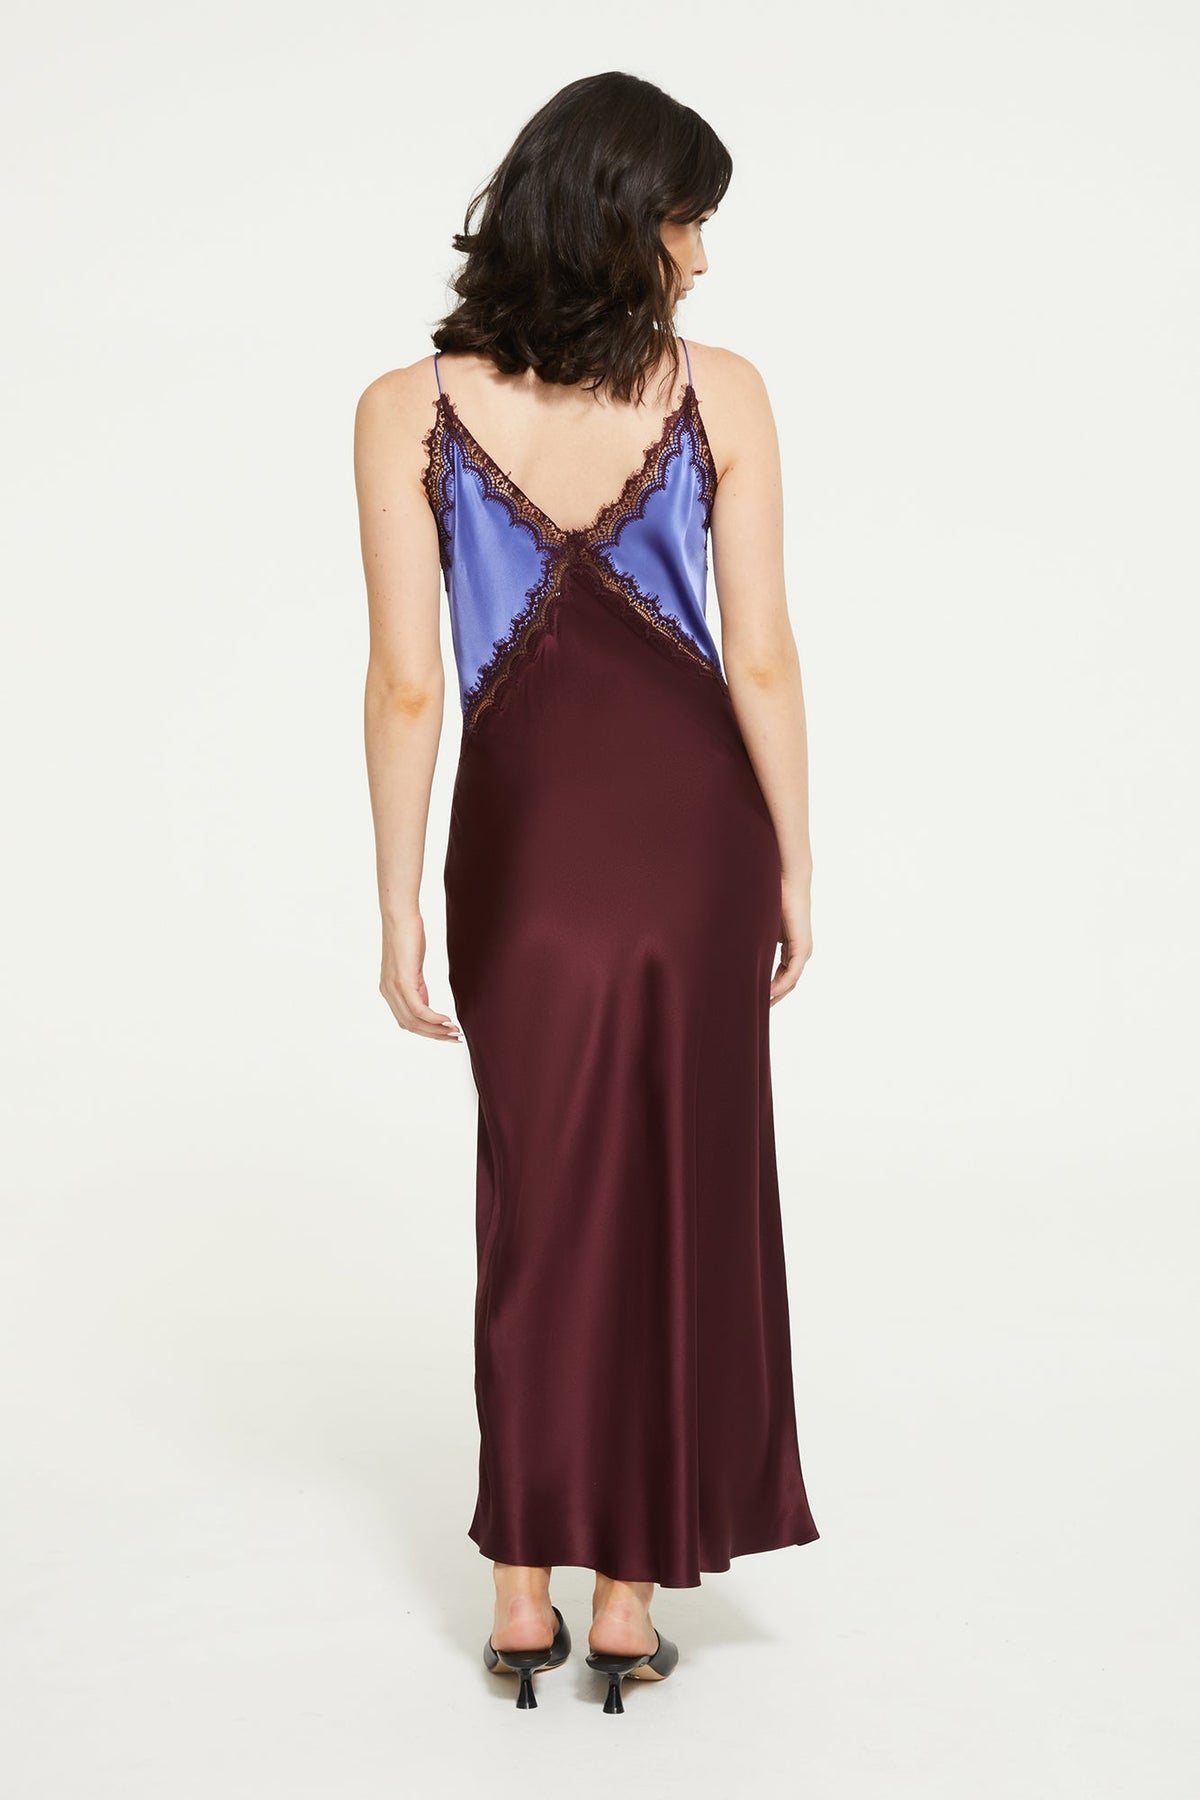 The Sadie Dress in Matisse Blue &amp; Merlot - 100% Silk by Ginia RTW